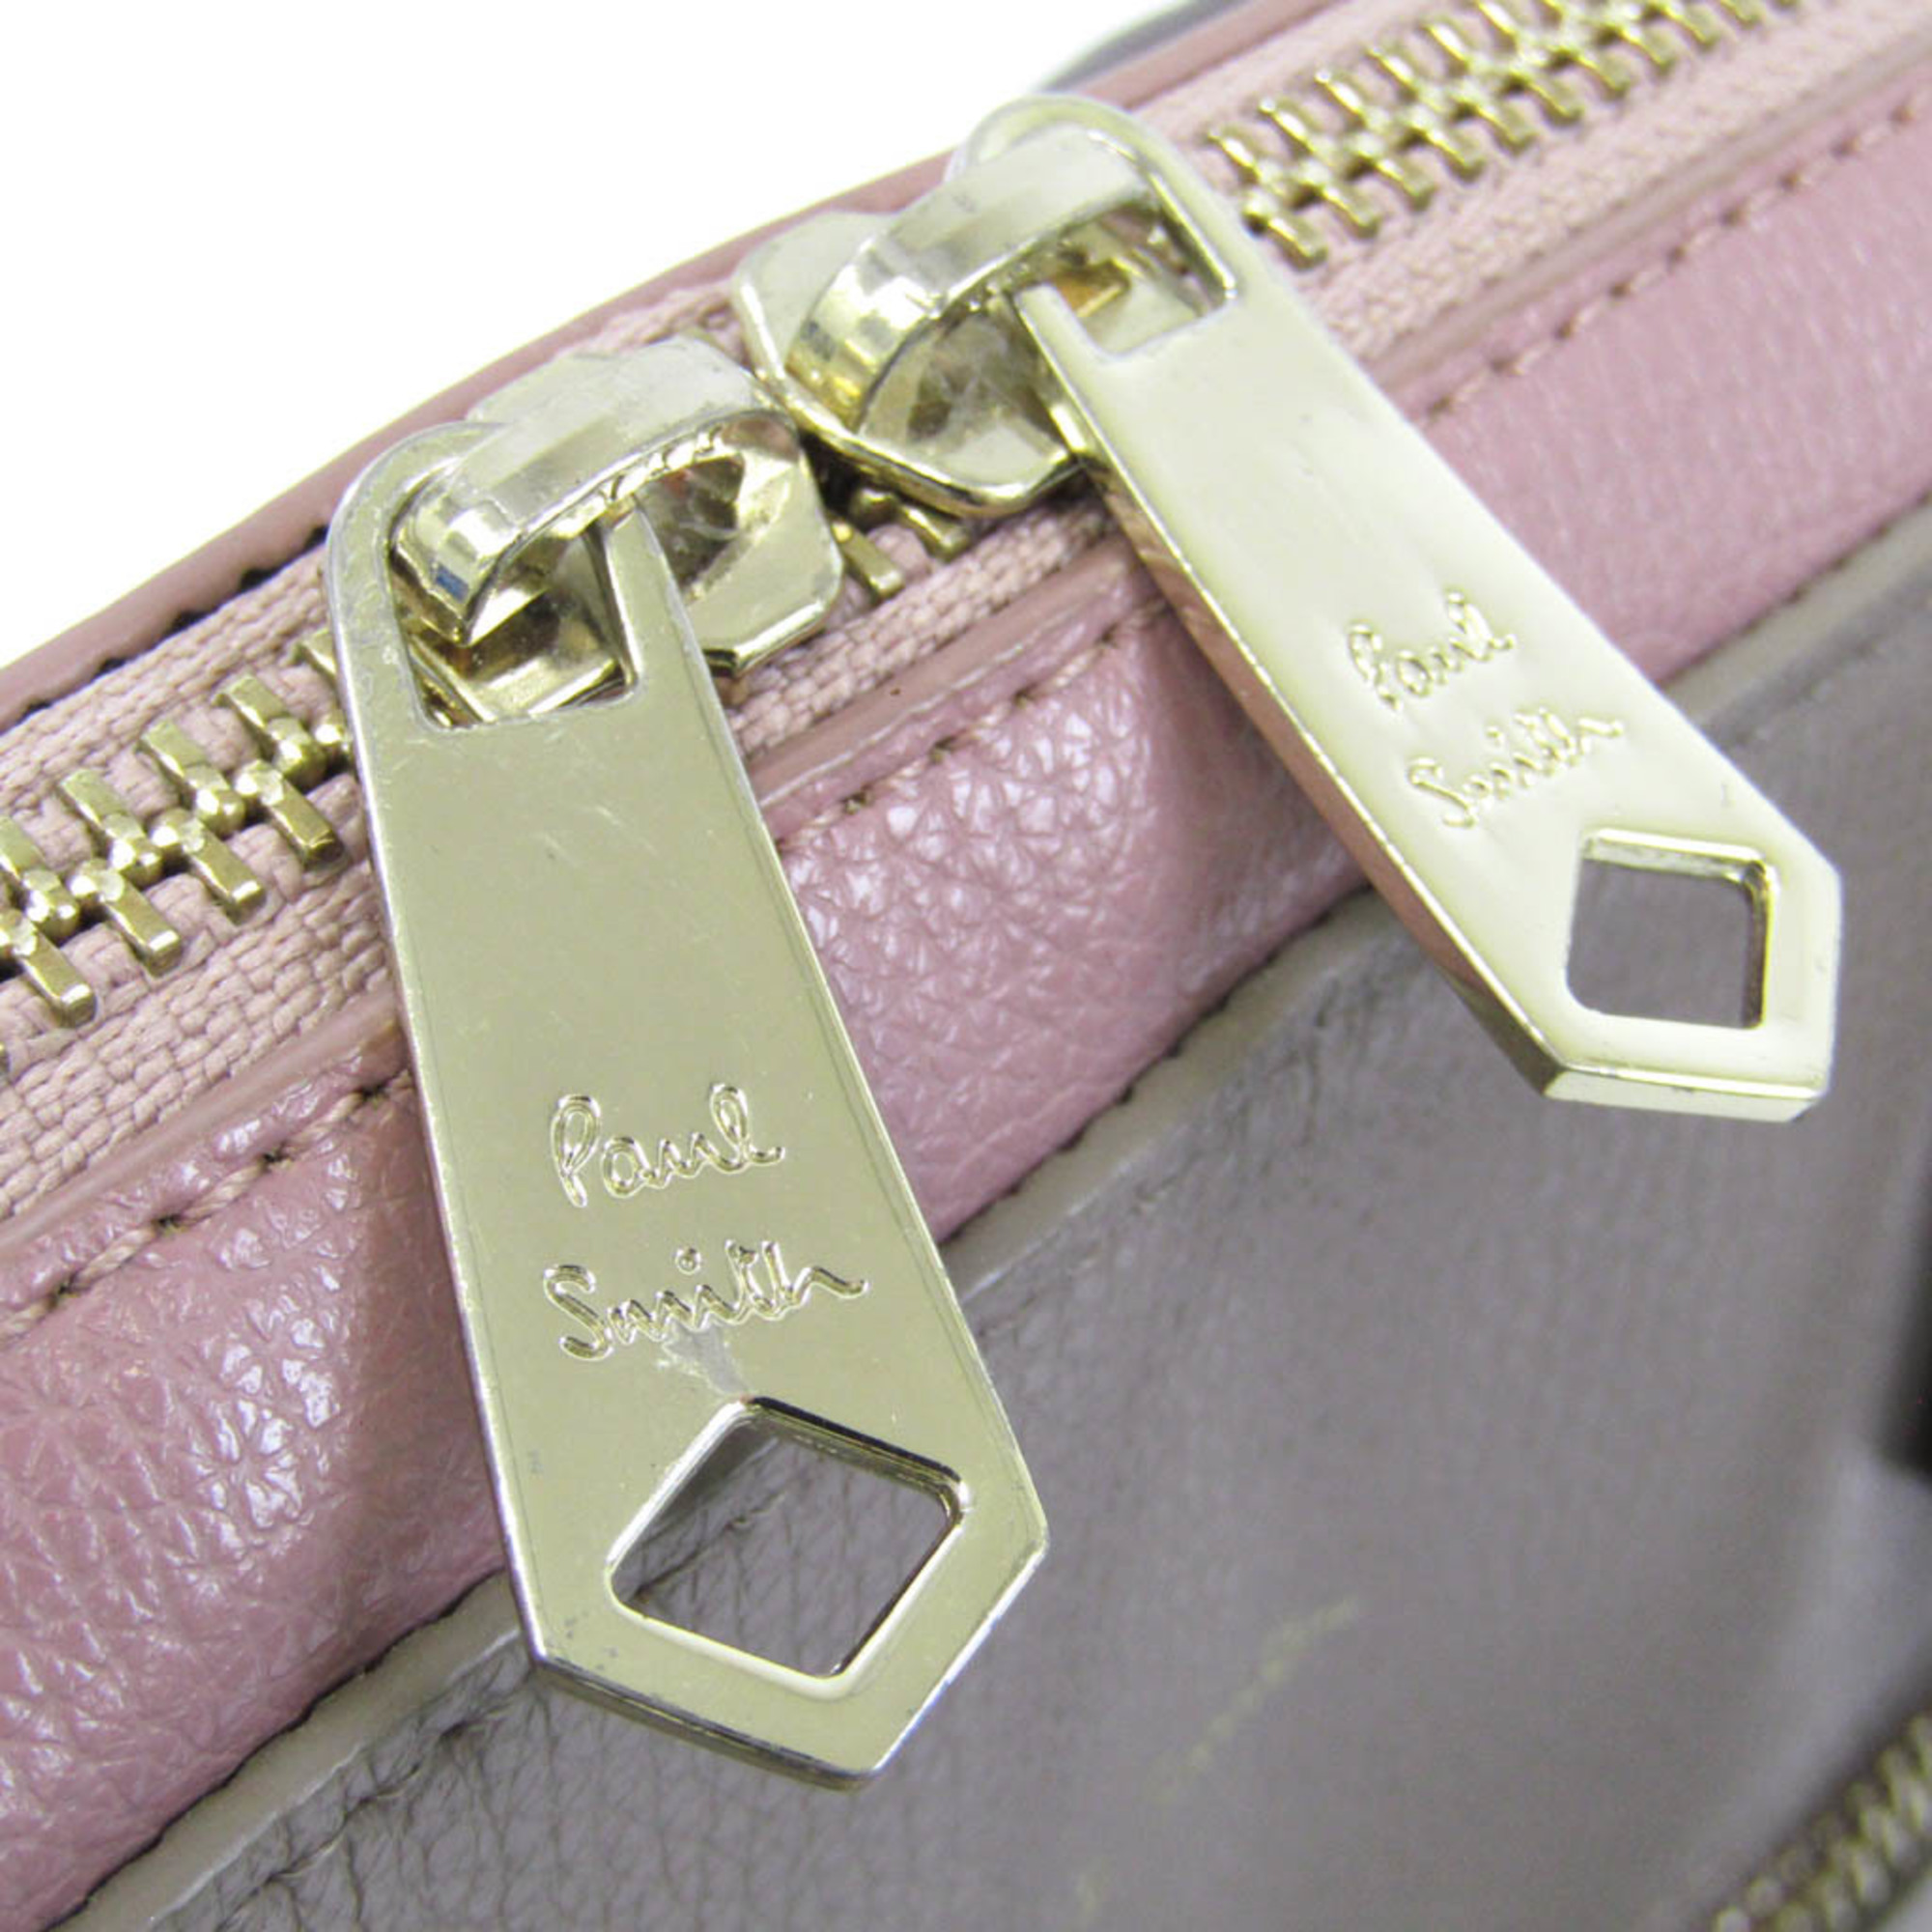 Paul Smith Women's Leather Handbag,Shoulder Bag Grayish,Pink